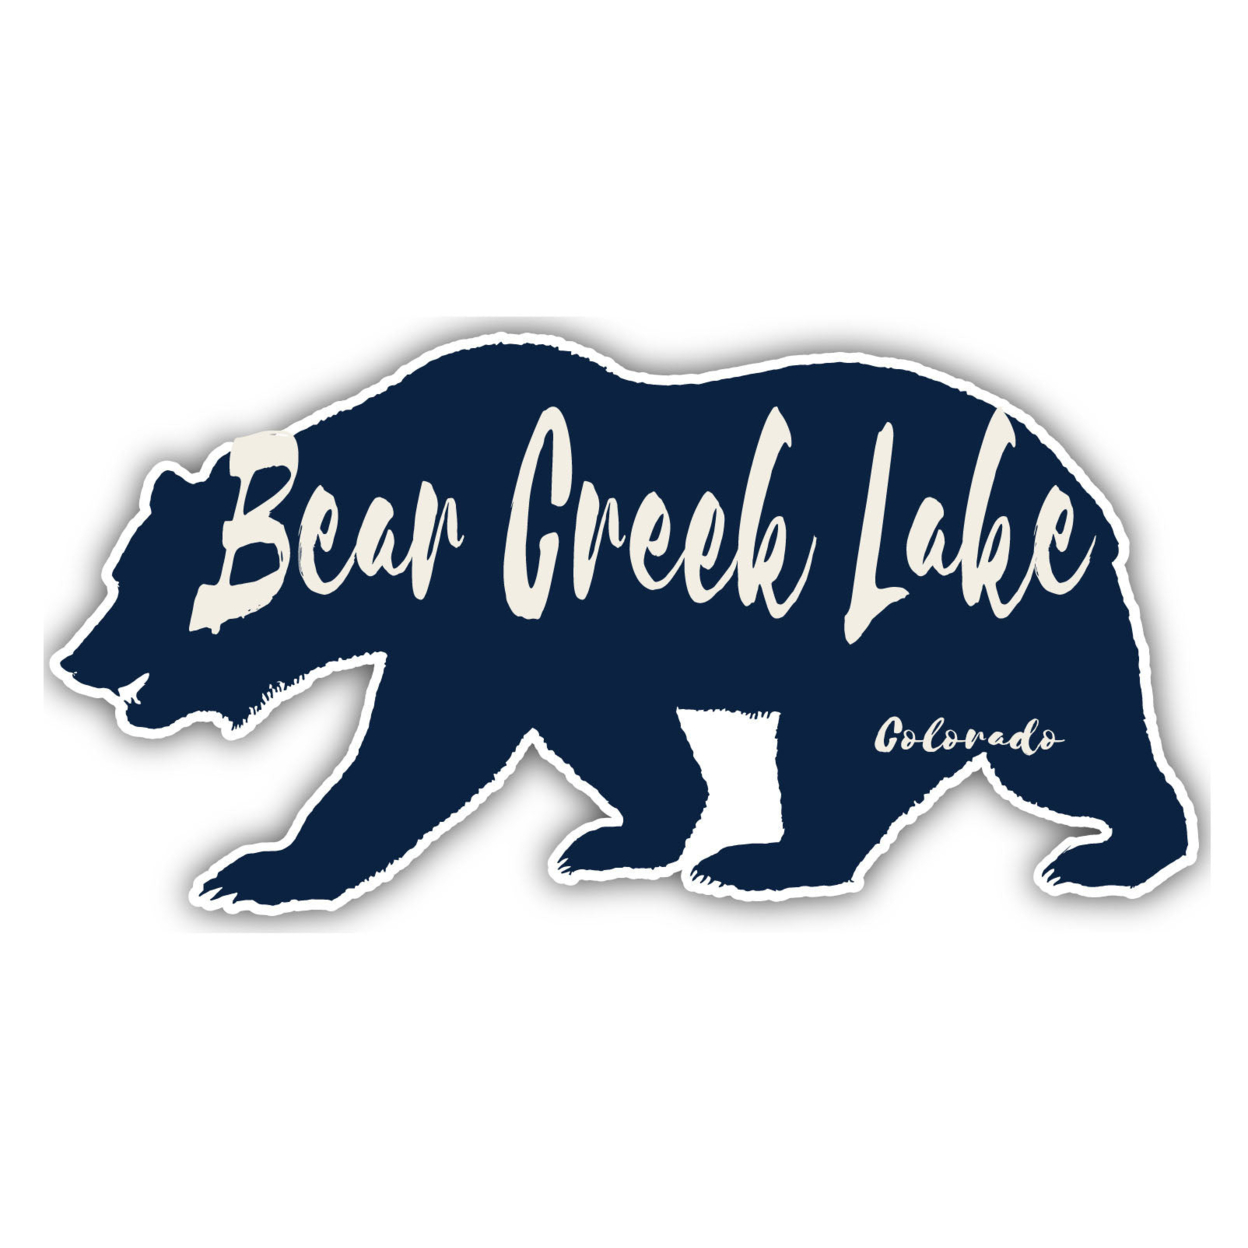 Bear Creek Lake Colorado Souvenir Decorative Stickers (Choose Theme And Size) - 4-Pack, 4-Inch, Bear